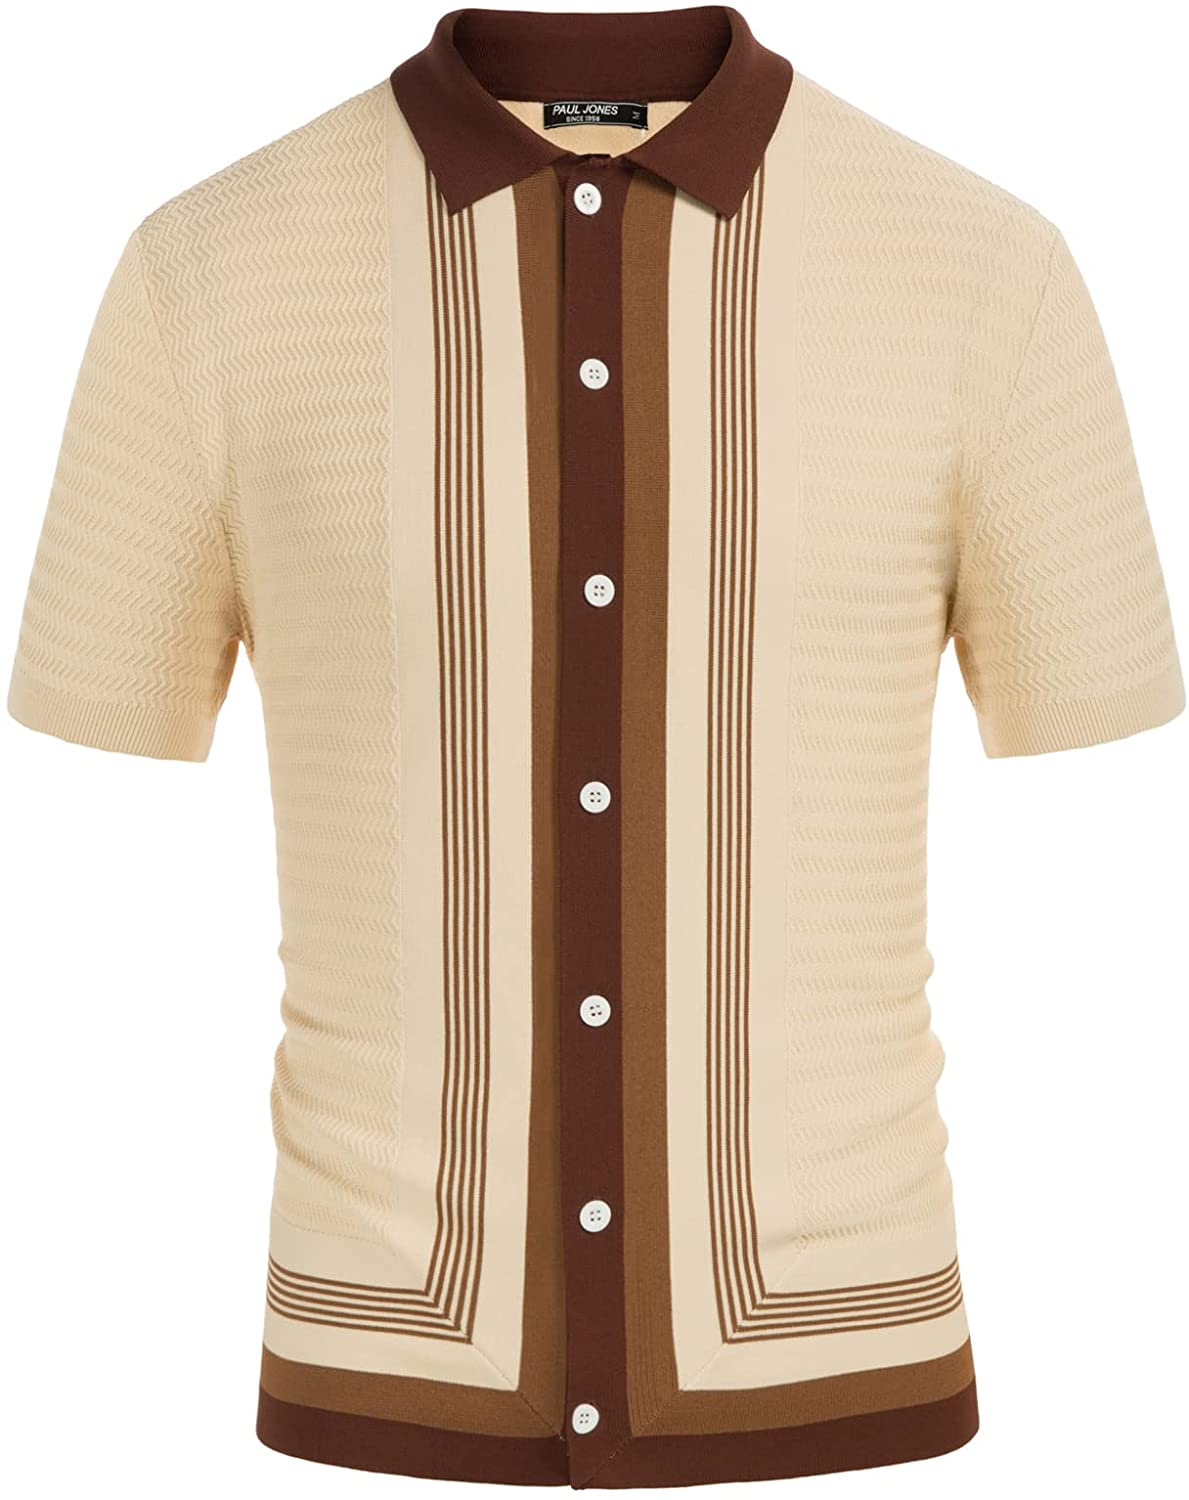 PJ PAUL JONES Men\'s Vintage Stripe Knit Polo Shirts Stylish Button Down  Cardigan | eBay